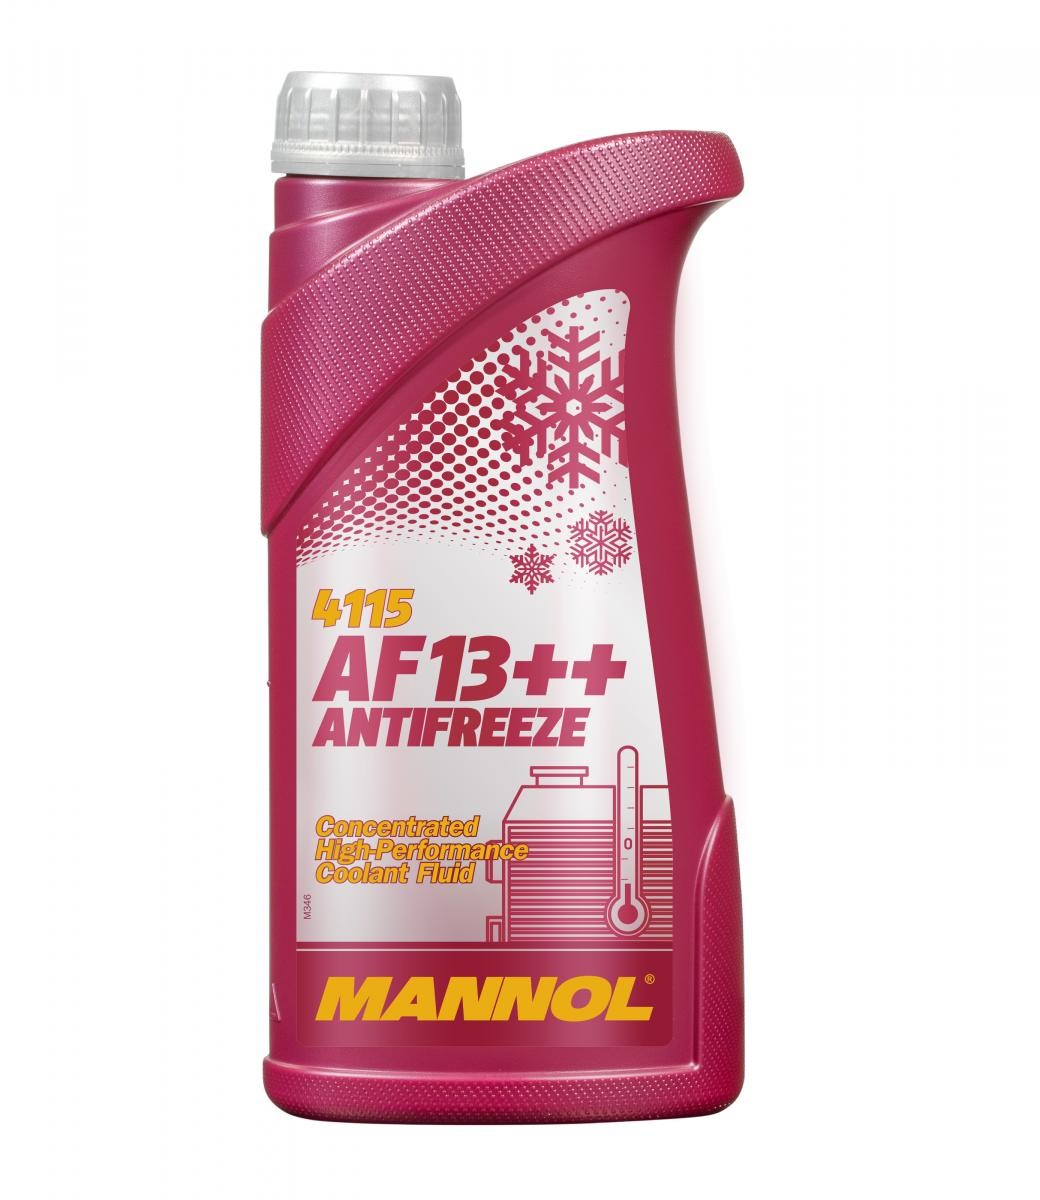 HERCULES ZX Kühlmittel G12 Rot, 1l, -38(50/50) MANNOL AF13++, High-performance MN4115-1